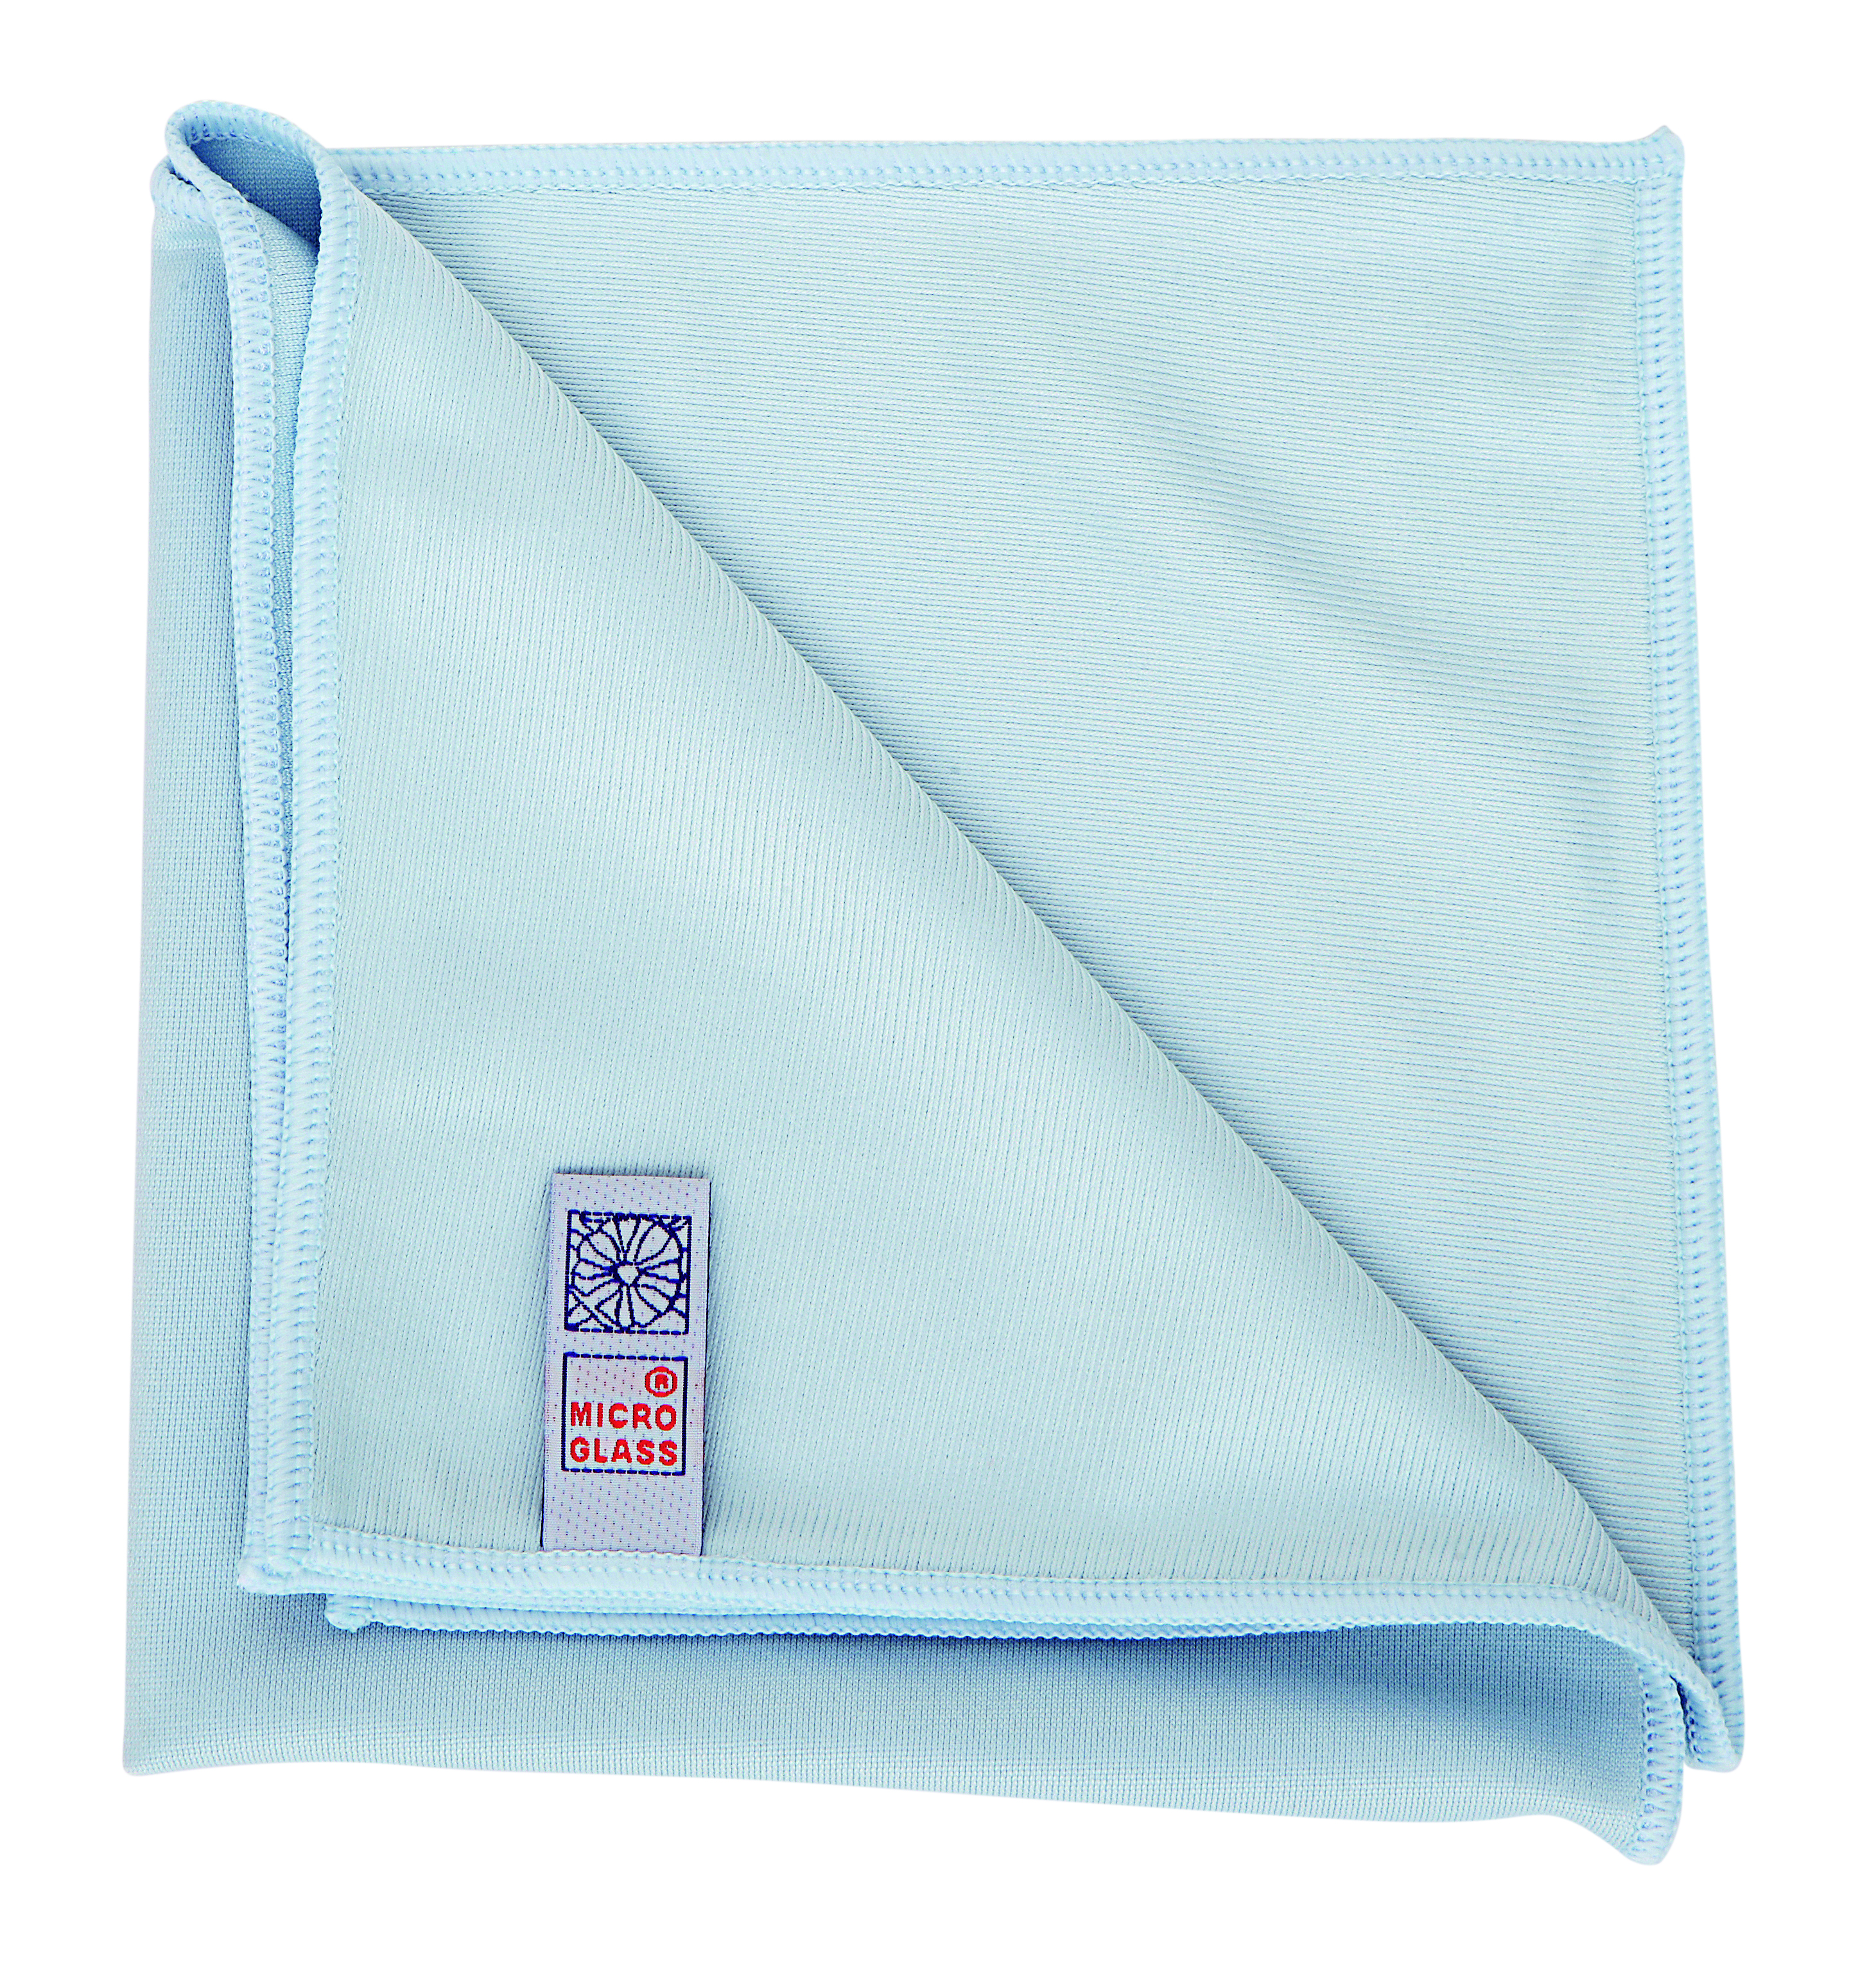 * Large Micro glass Blue Cloth 70x76cm